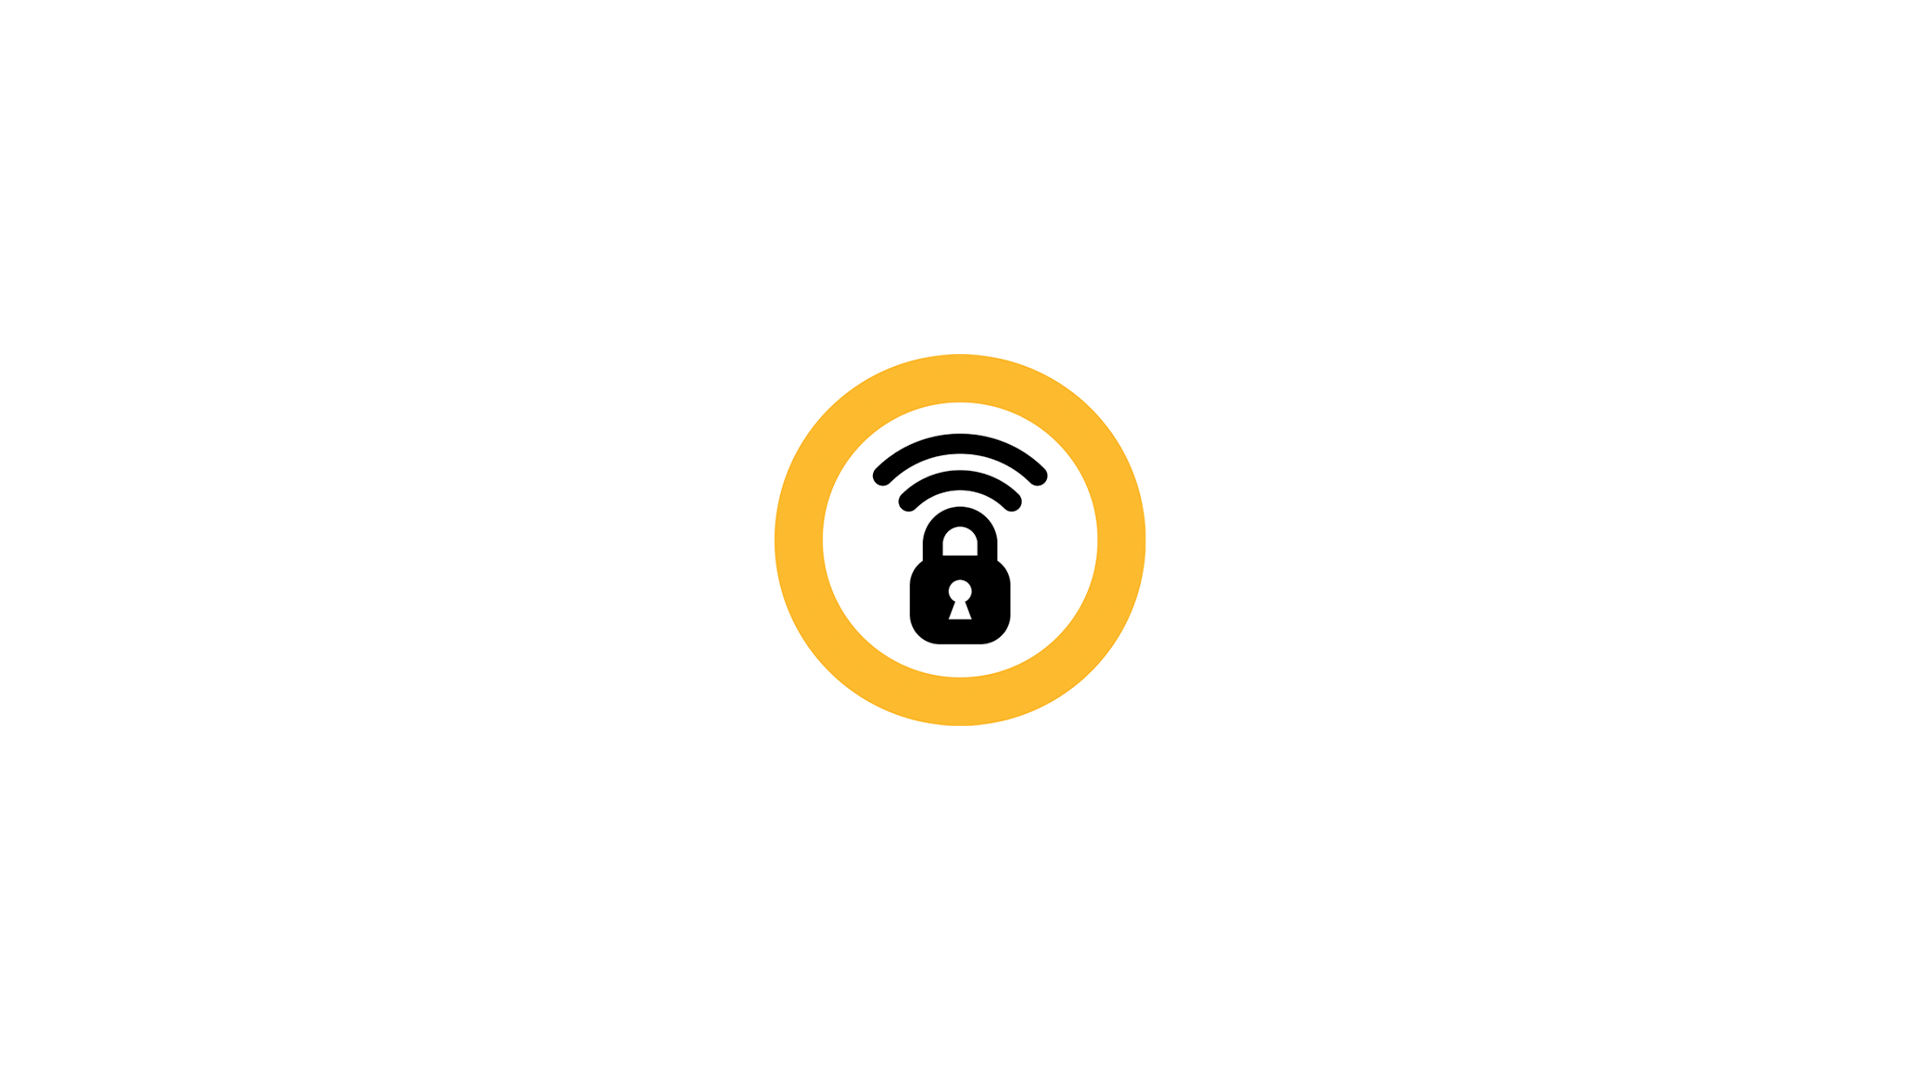 Norton-Secure-VPN-logo-on-a-white-background-1